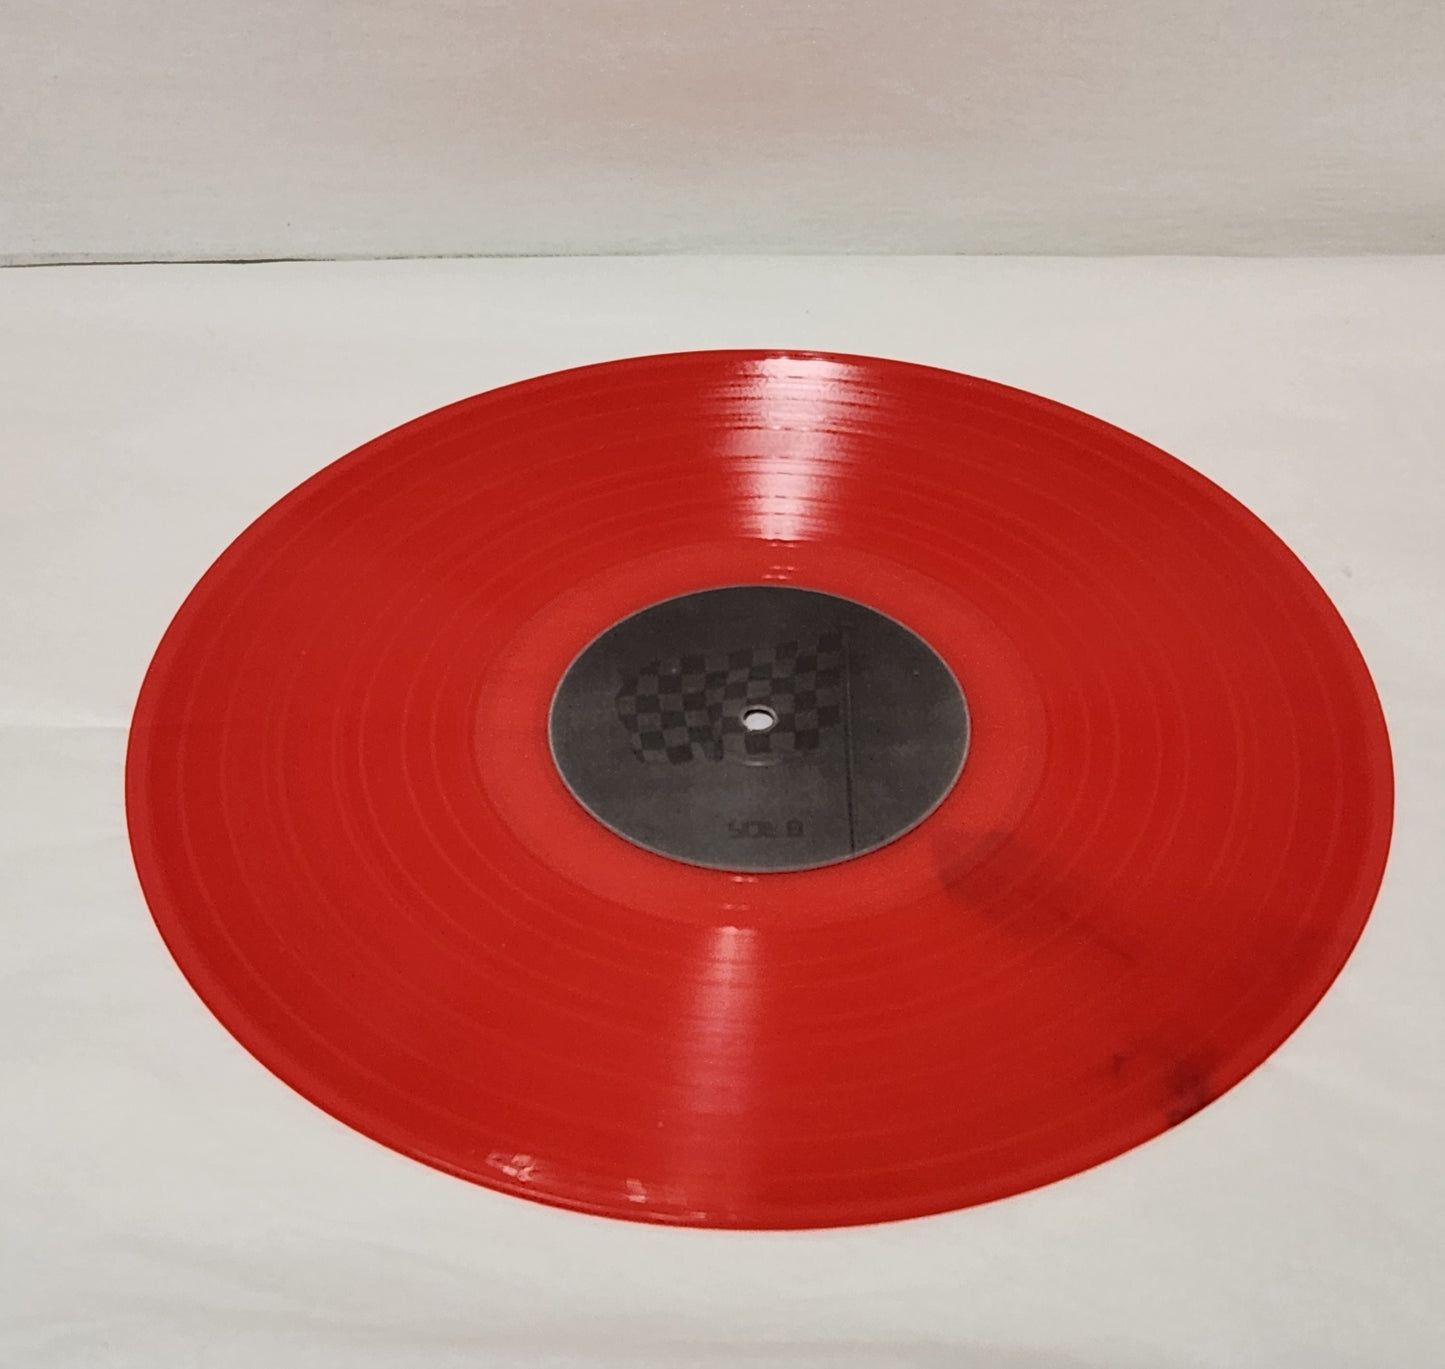 Matt Skiba "Demos" 2010 Acoustic Rock Record Album (Red Vinyl)